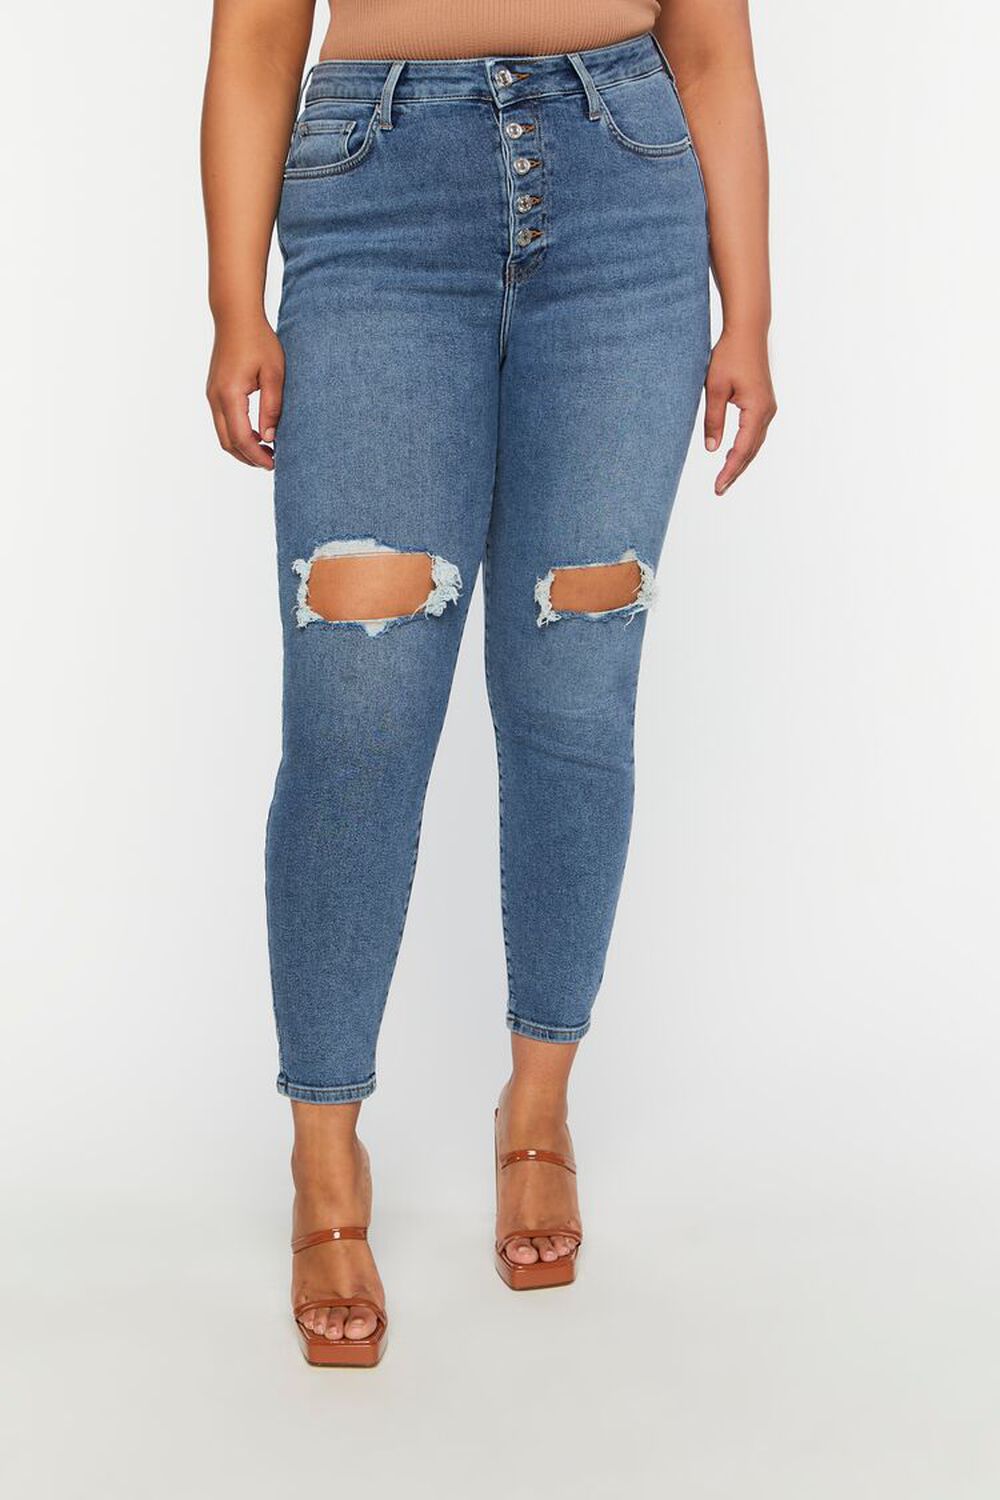 MEDIUM DENIM Plus Size Distressed High-Rise Skinny Jeans, image 1